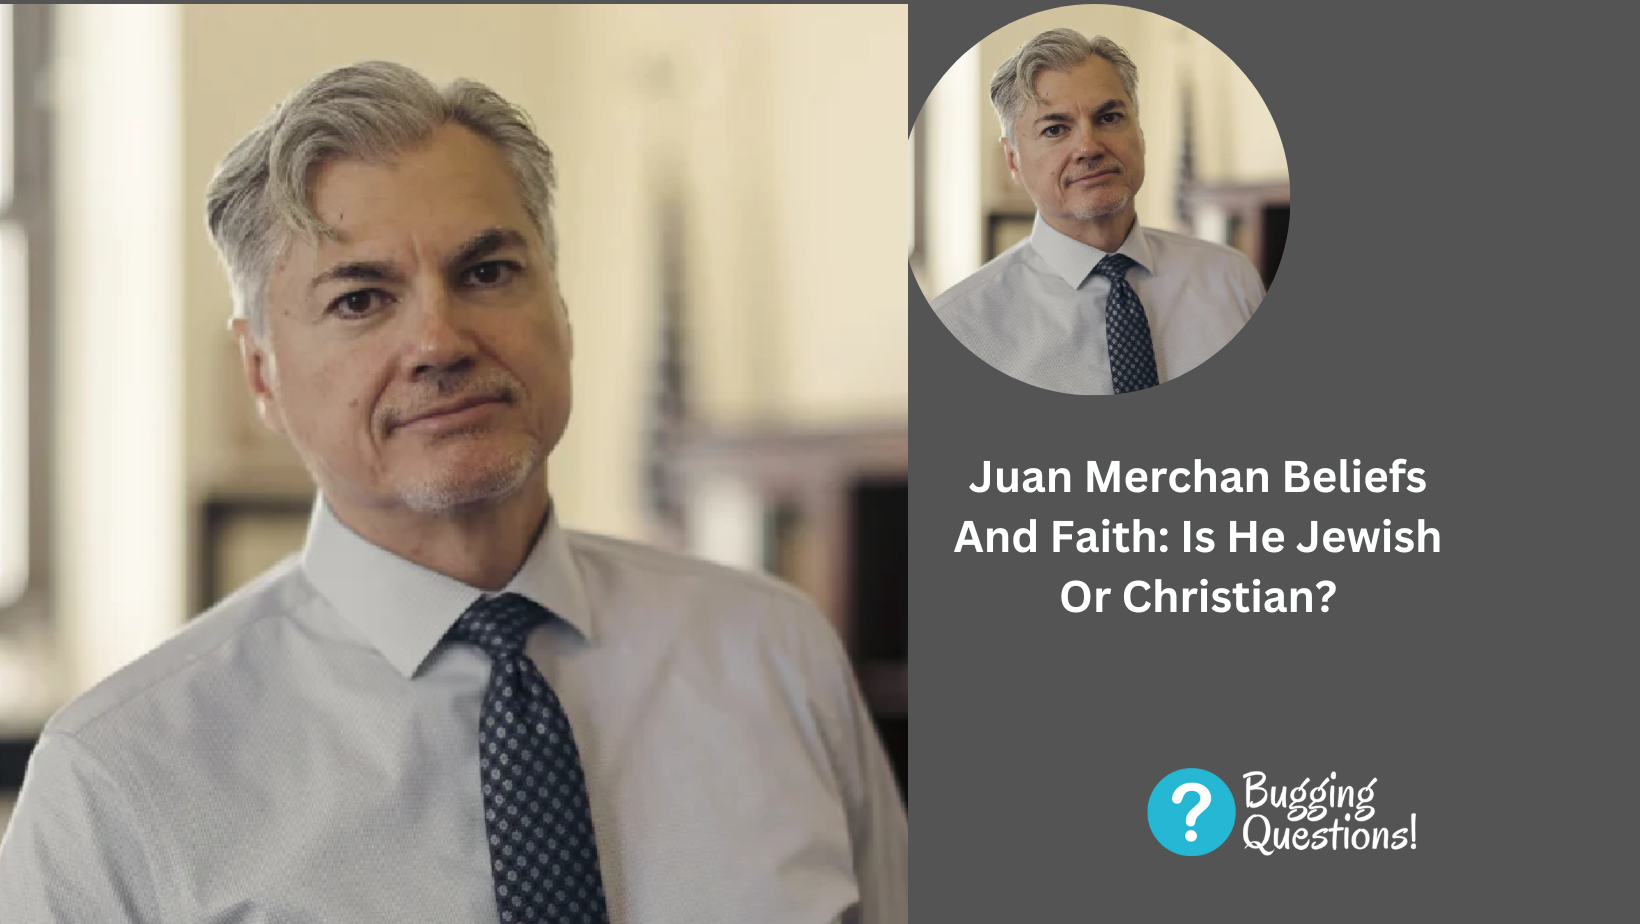 Juan Merchan Beliefs And Faith: Is He Jewish Or Christian?